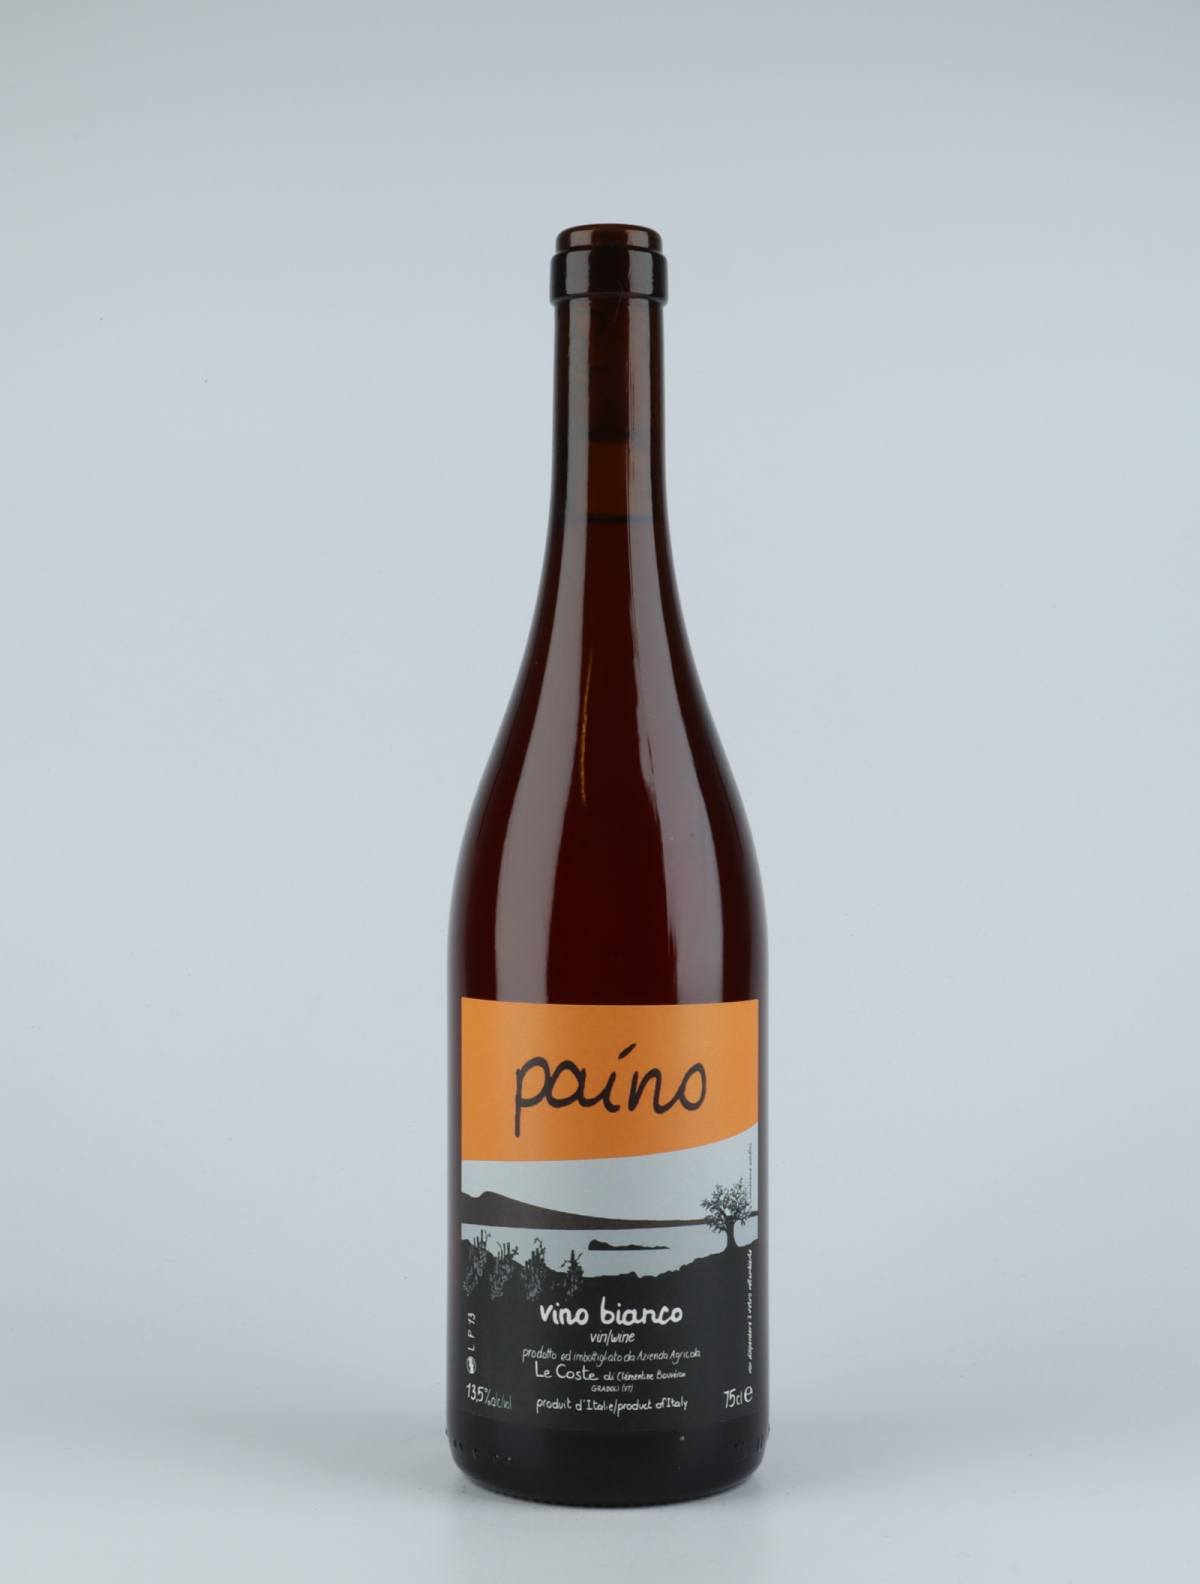 A bottle 2013 Paino Bianco Orange wine from Le Coste, Lazio in Italy